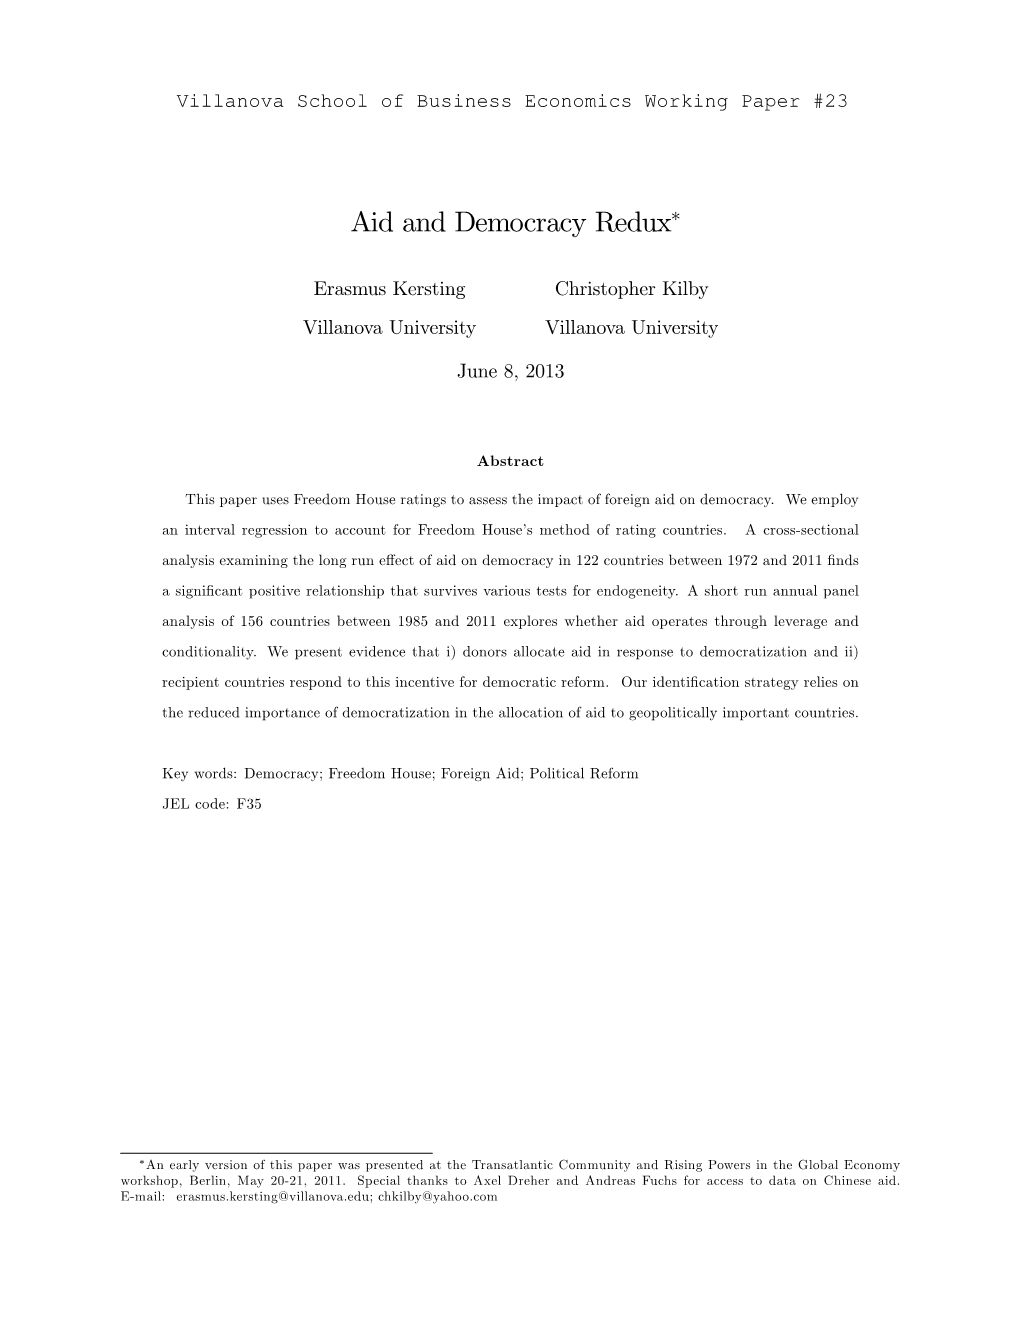 Aid and Democracy Redux∗